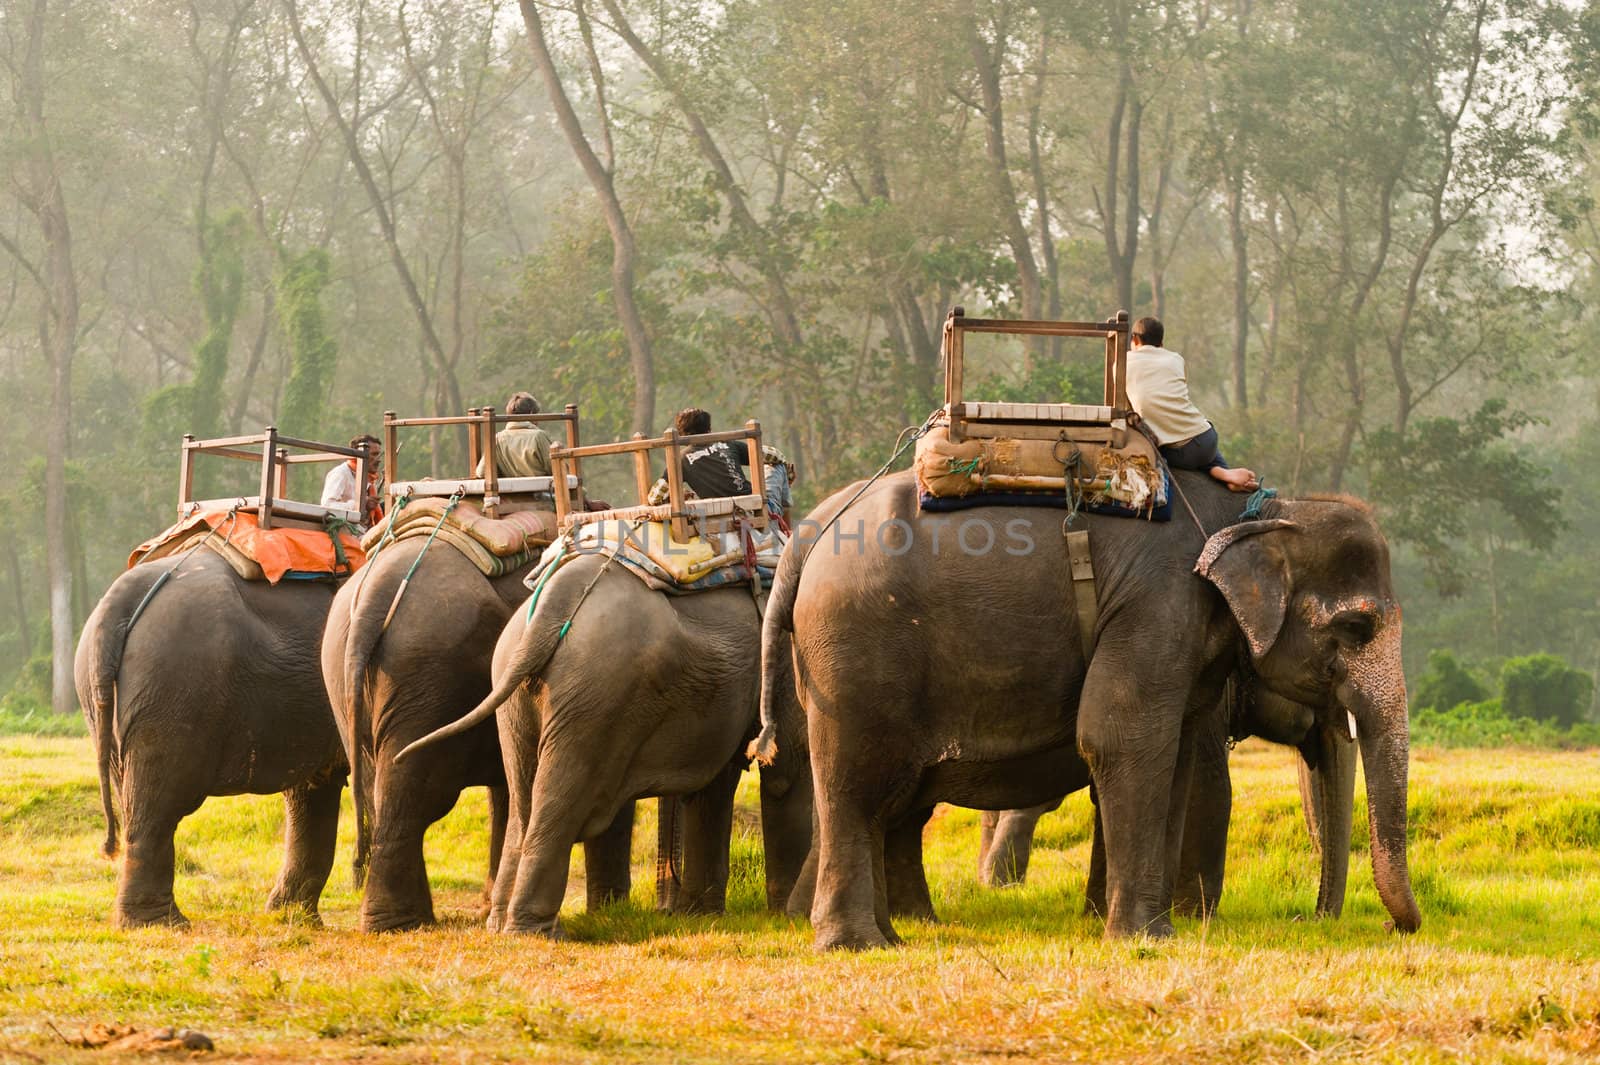 Elephant safari by oguzdkn